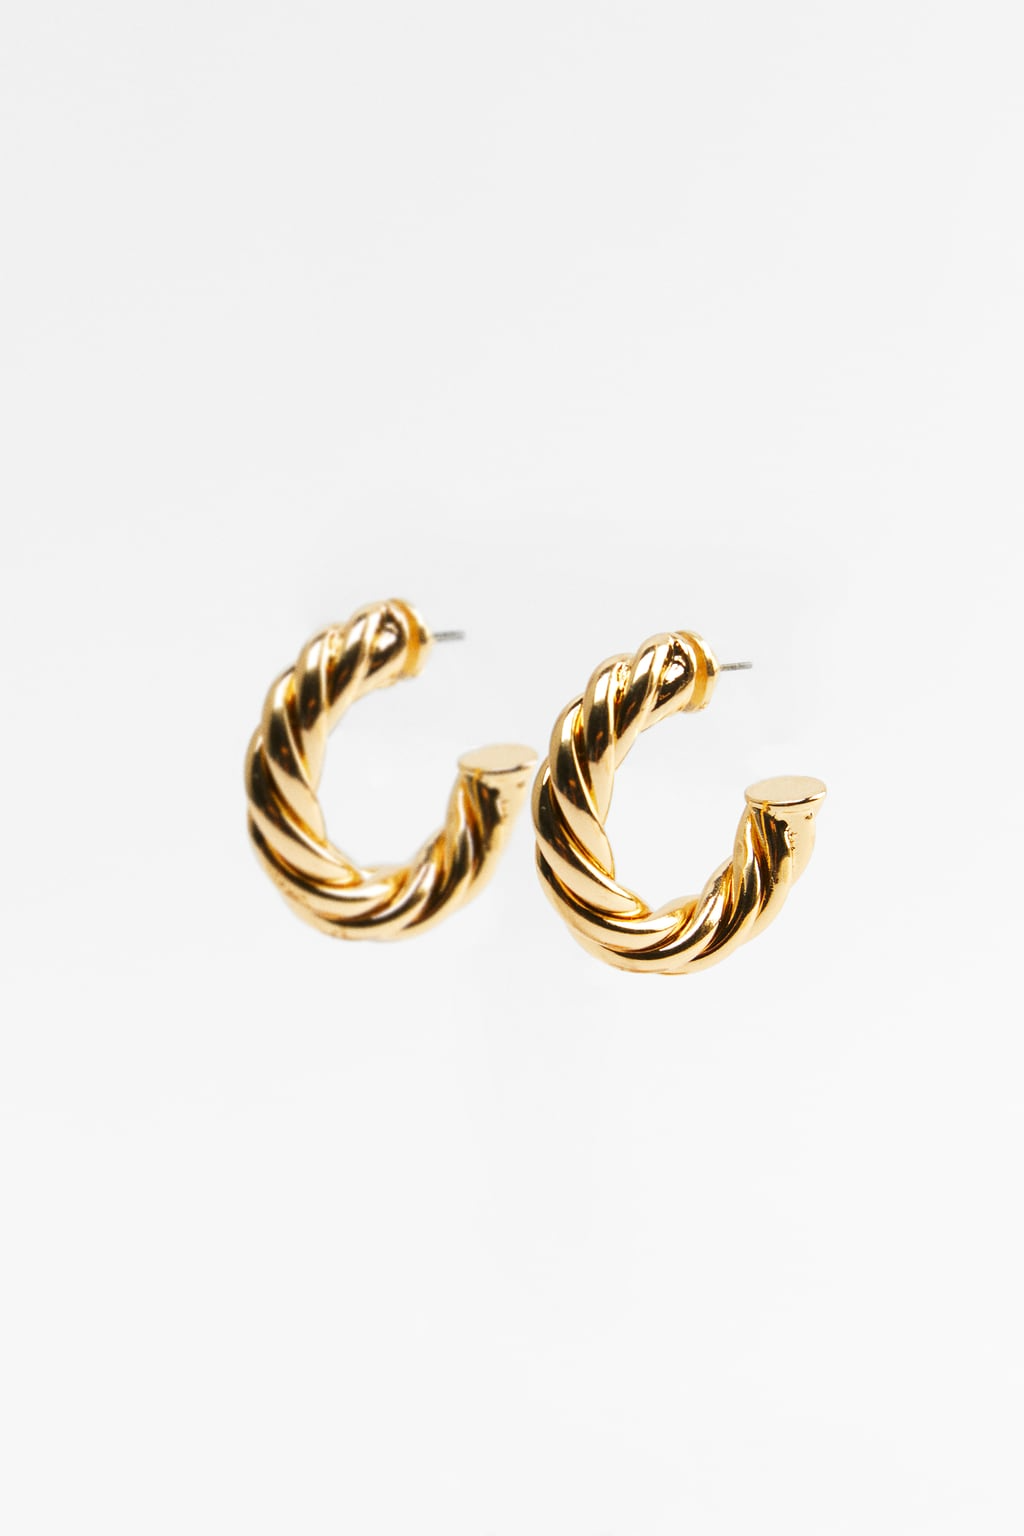 Zara Twisted Hoop Earrings €9.95